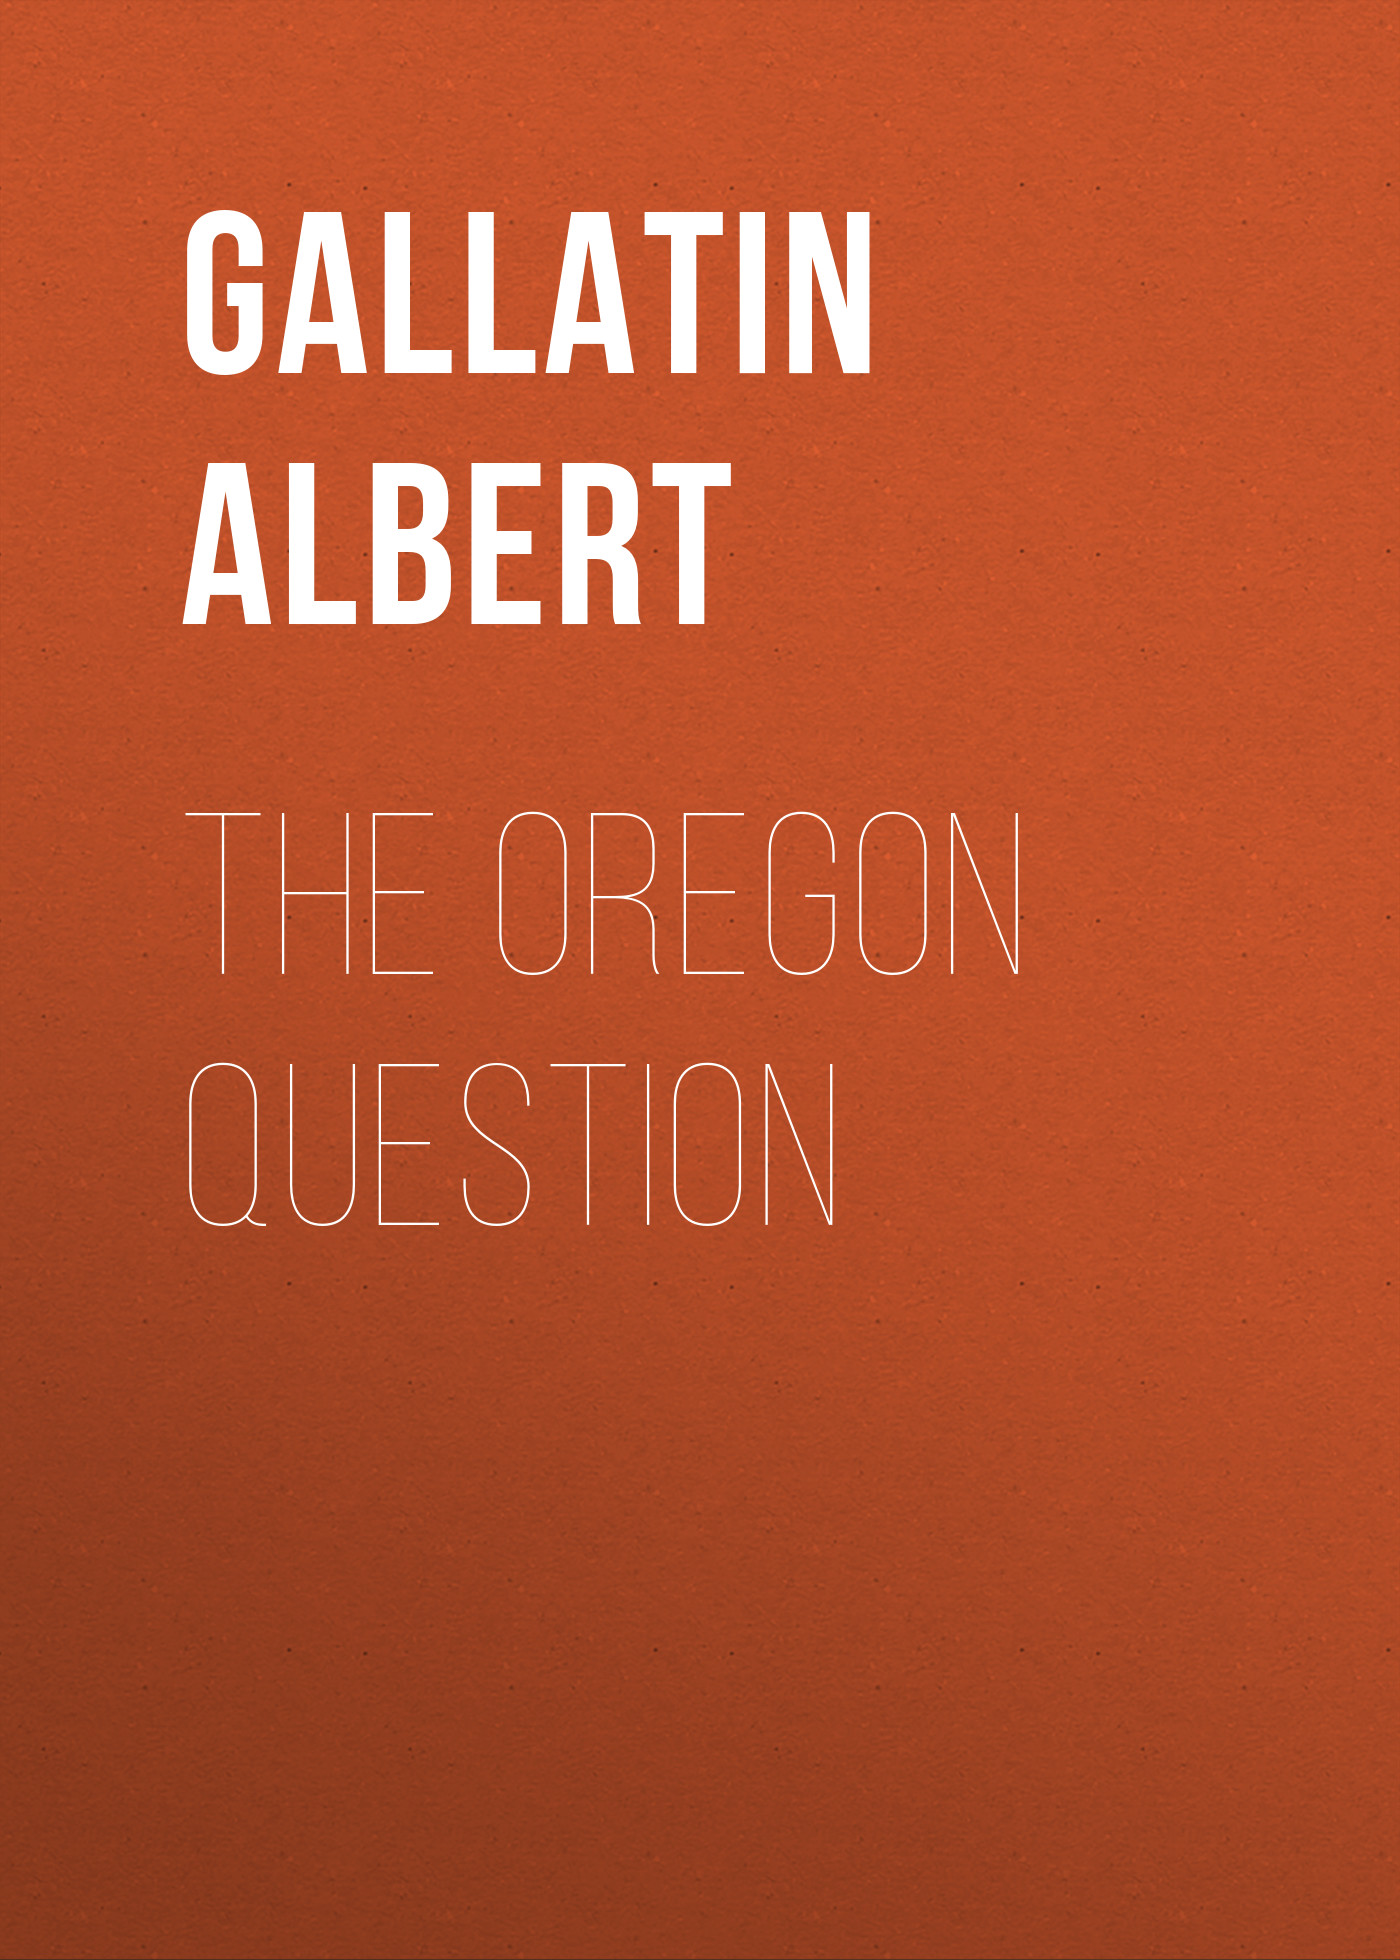 Gallatin Albert The Oregon Question